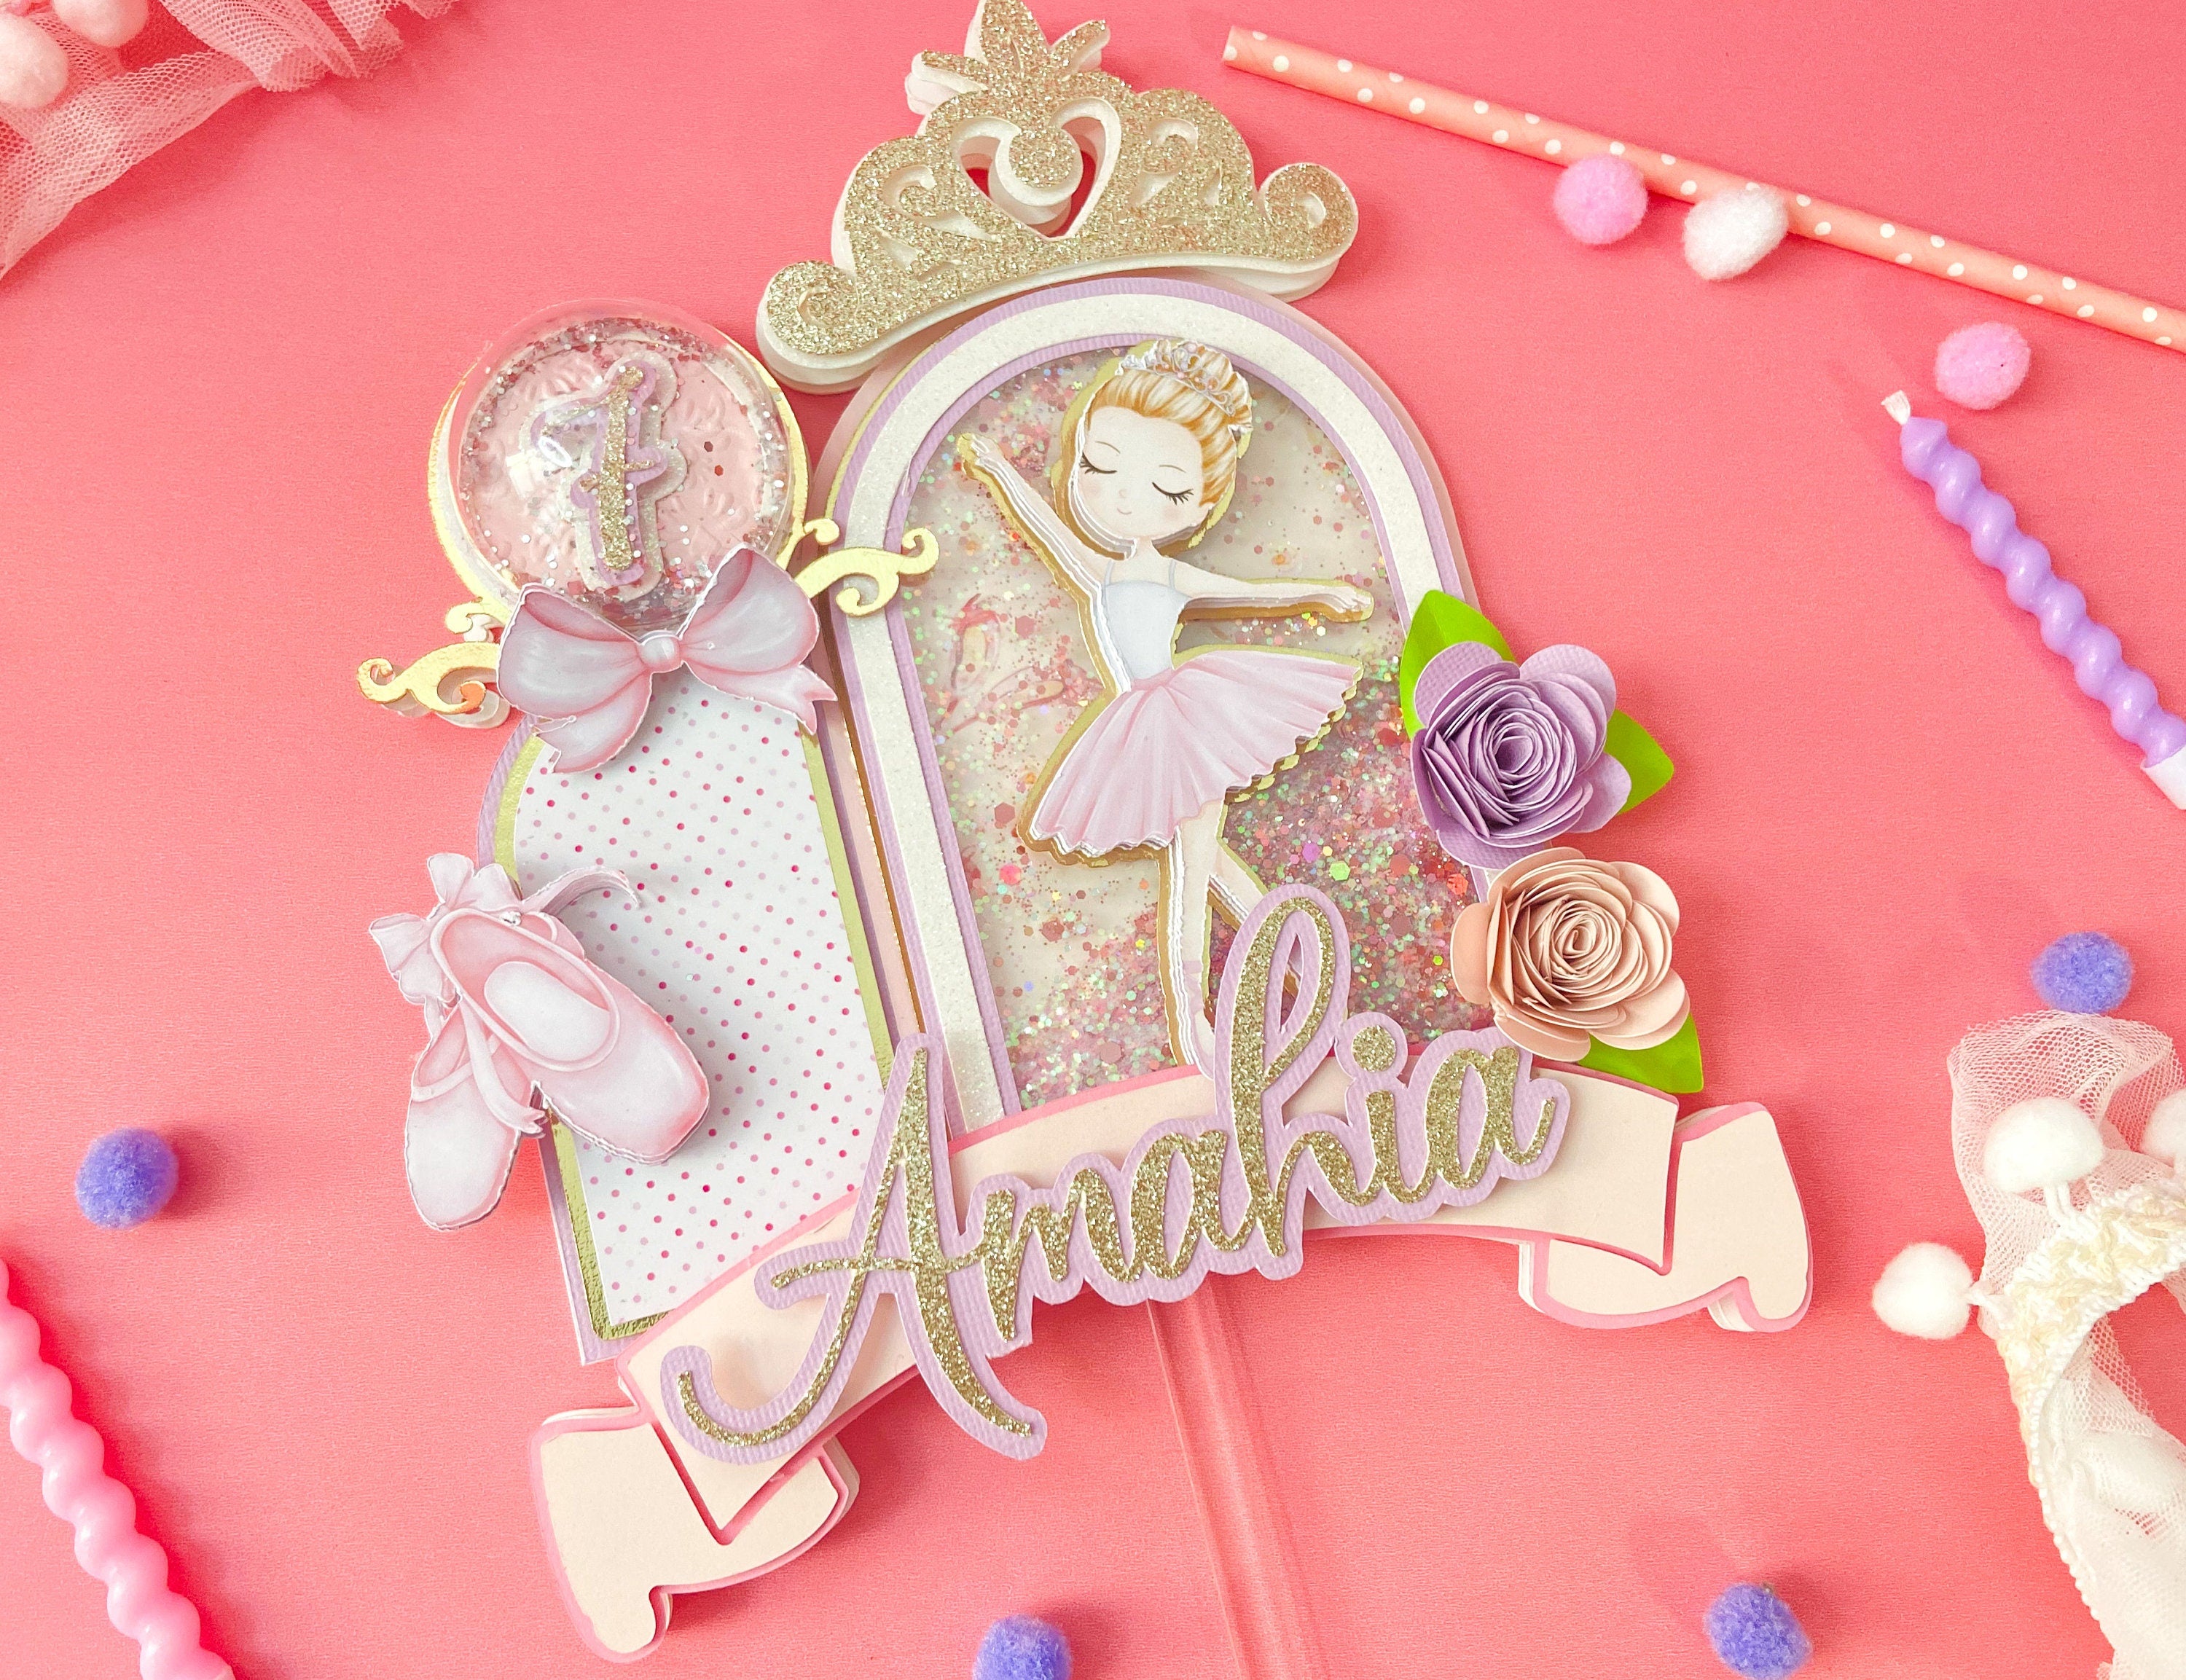 Ballet Cookie Decorating Kit – The Flour Box